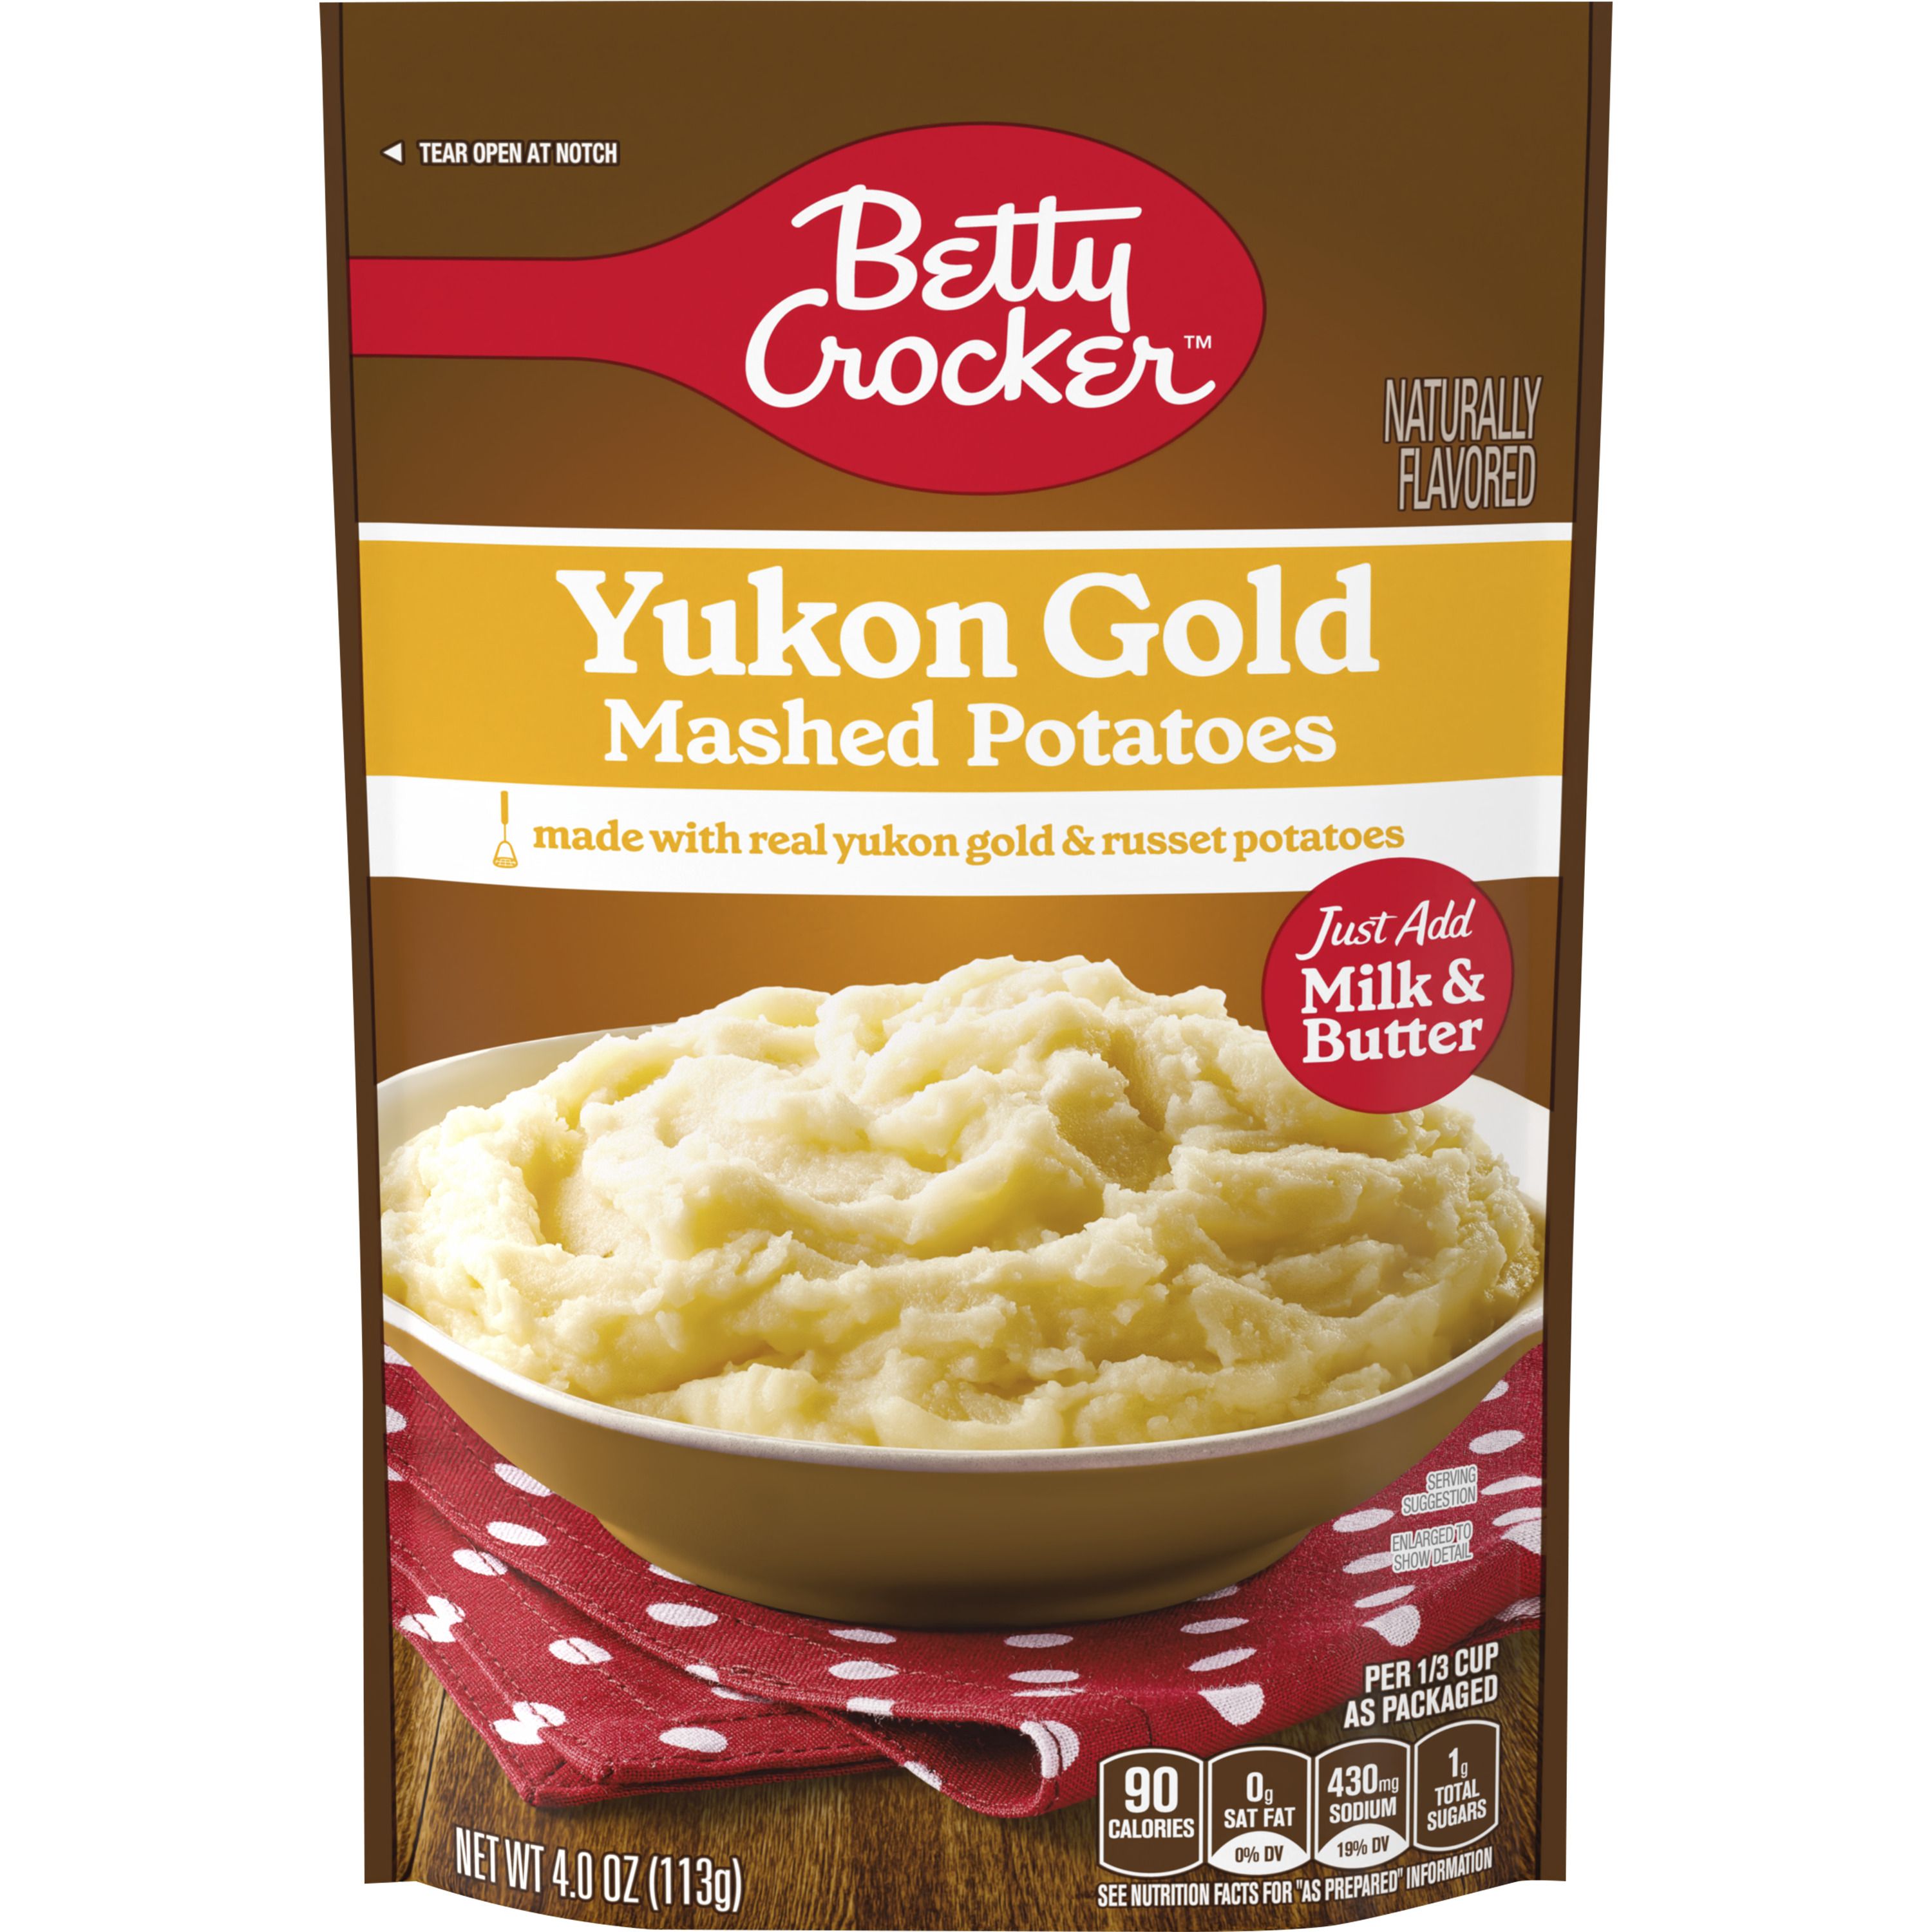 Betty Crocker Yukon Gold Mashed Potatoes, 4 ounces - Front